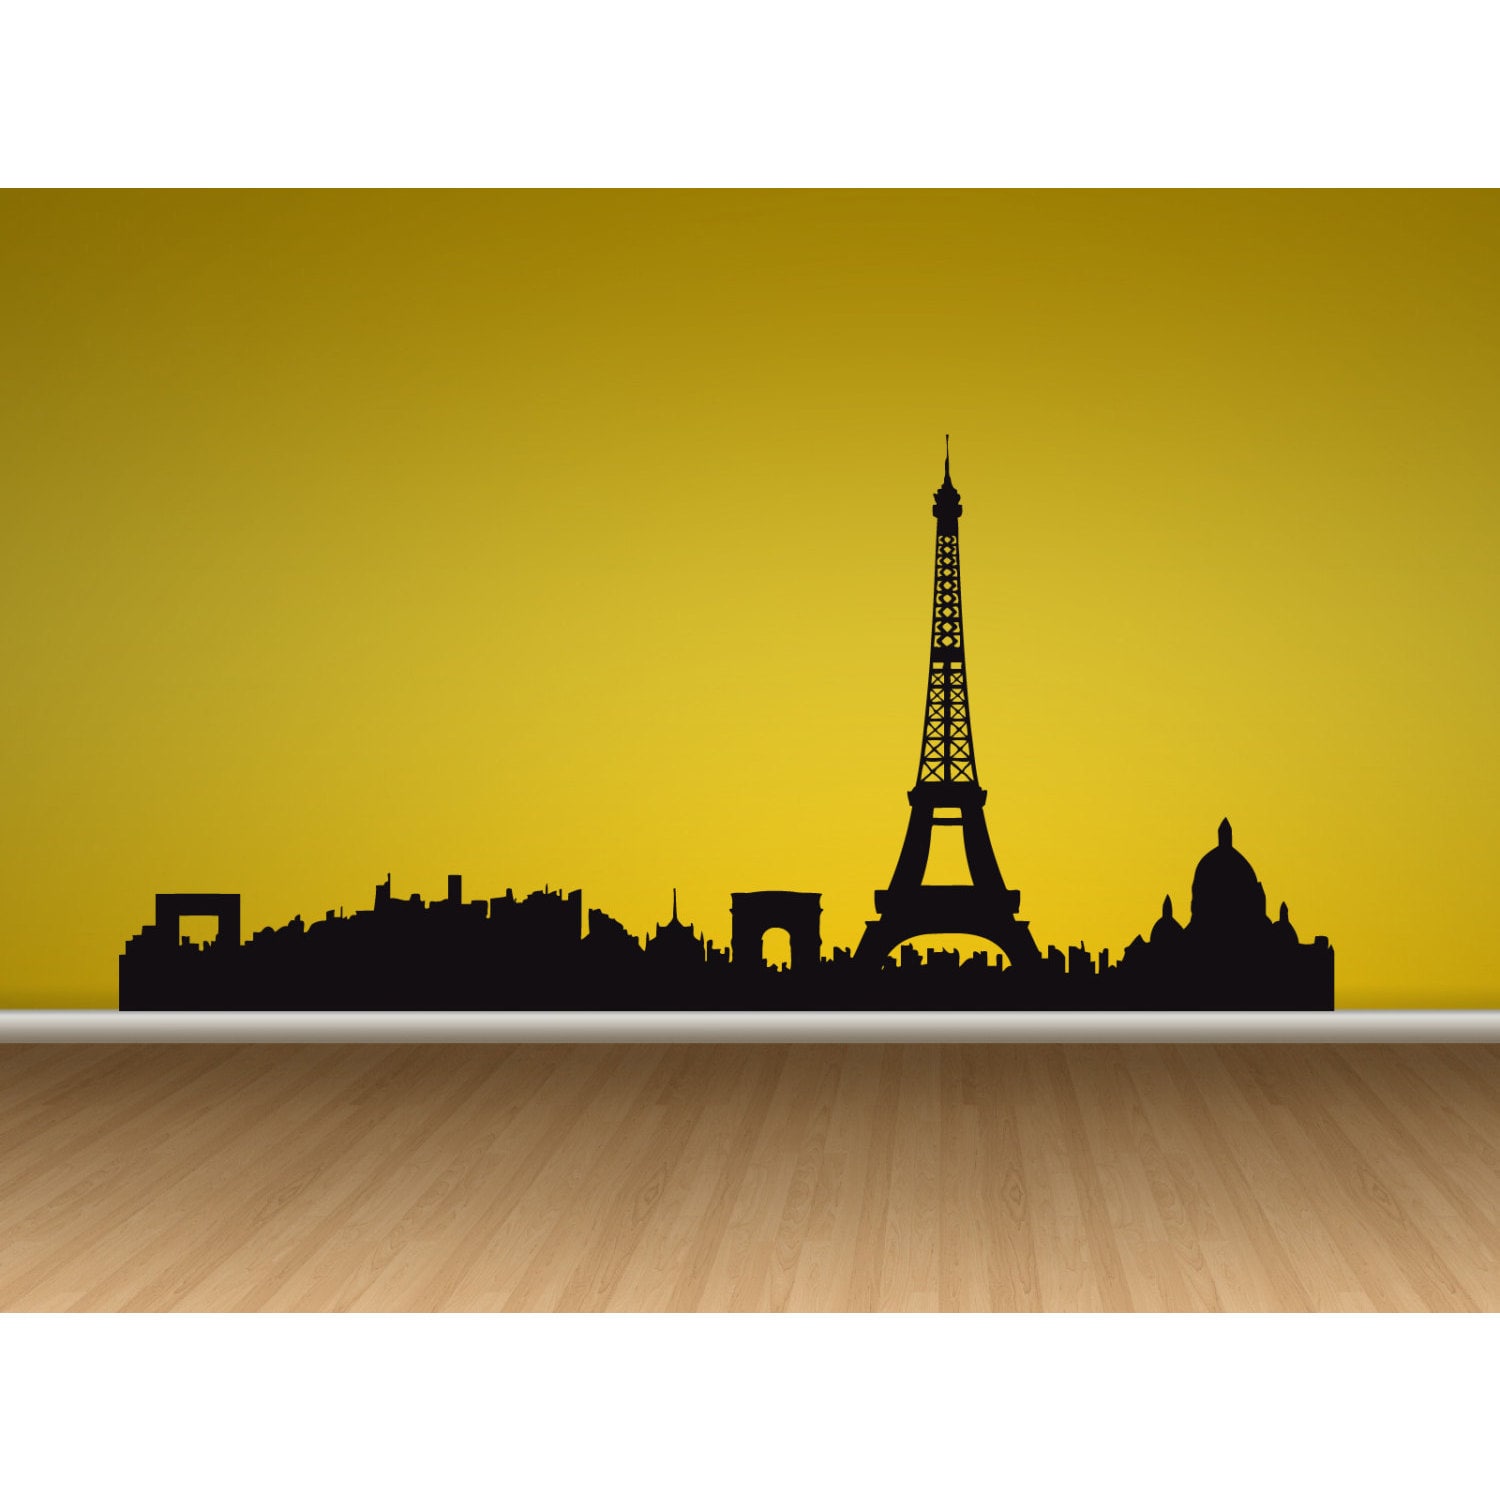 PARIS SKYLINE EIFFEL TOWER WALL ART STICKER DECALs transfer graphic vinyl RA188 